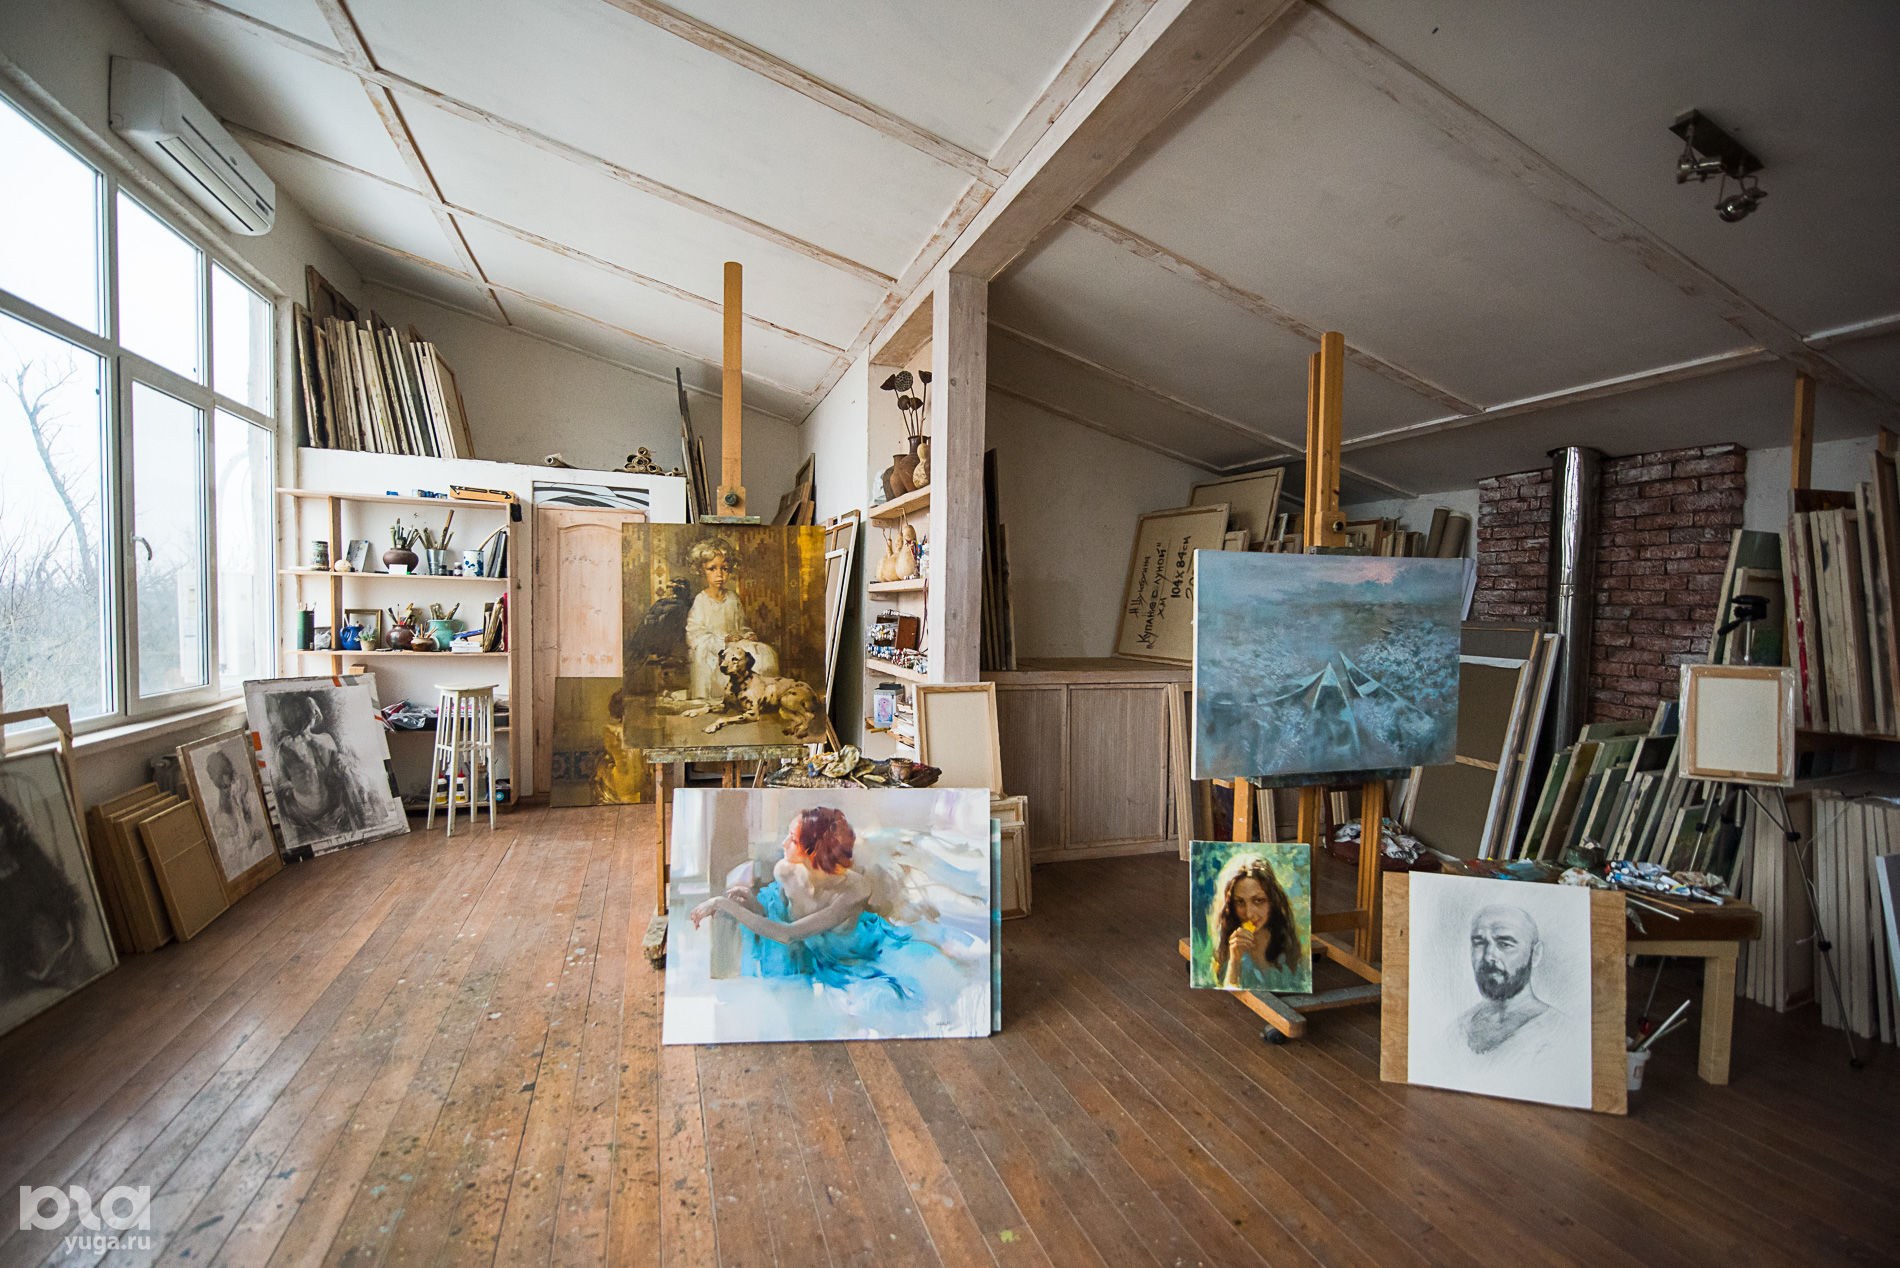 Bright and airy artist's studio